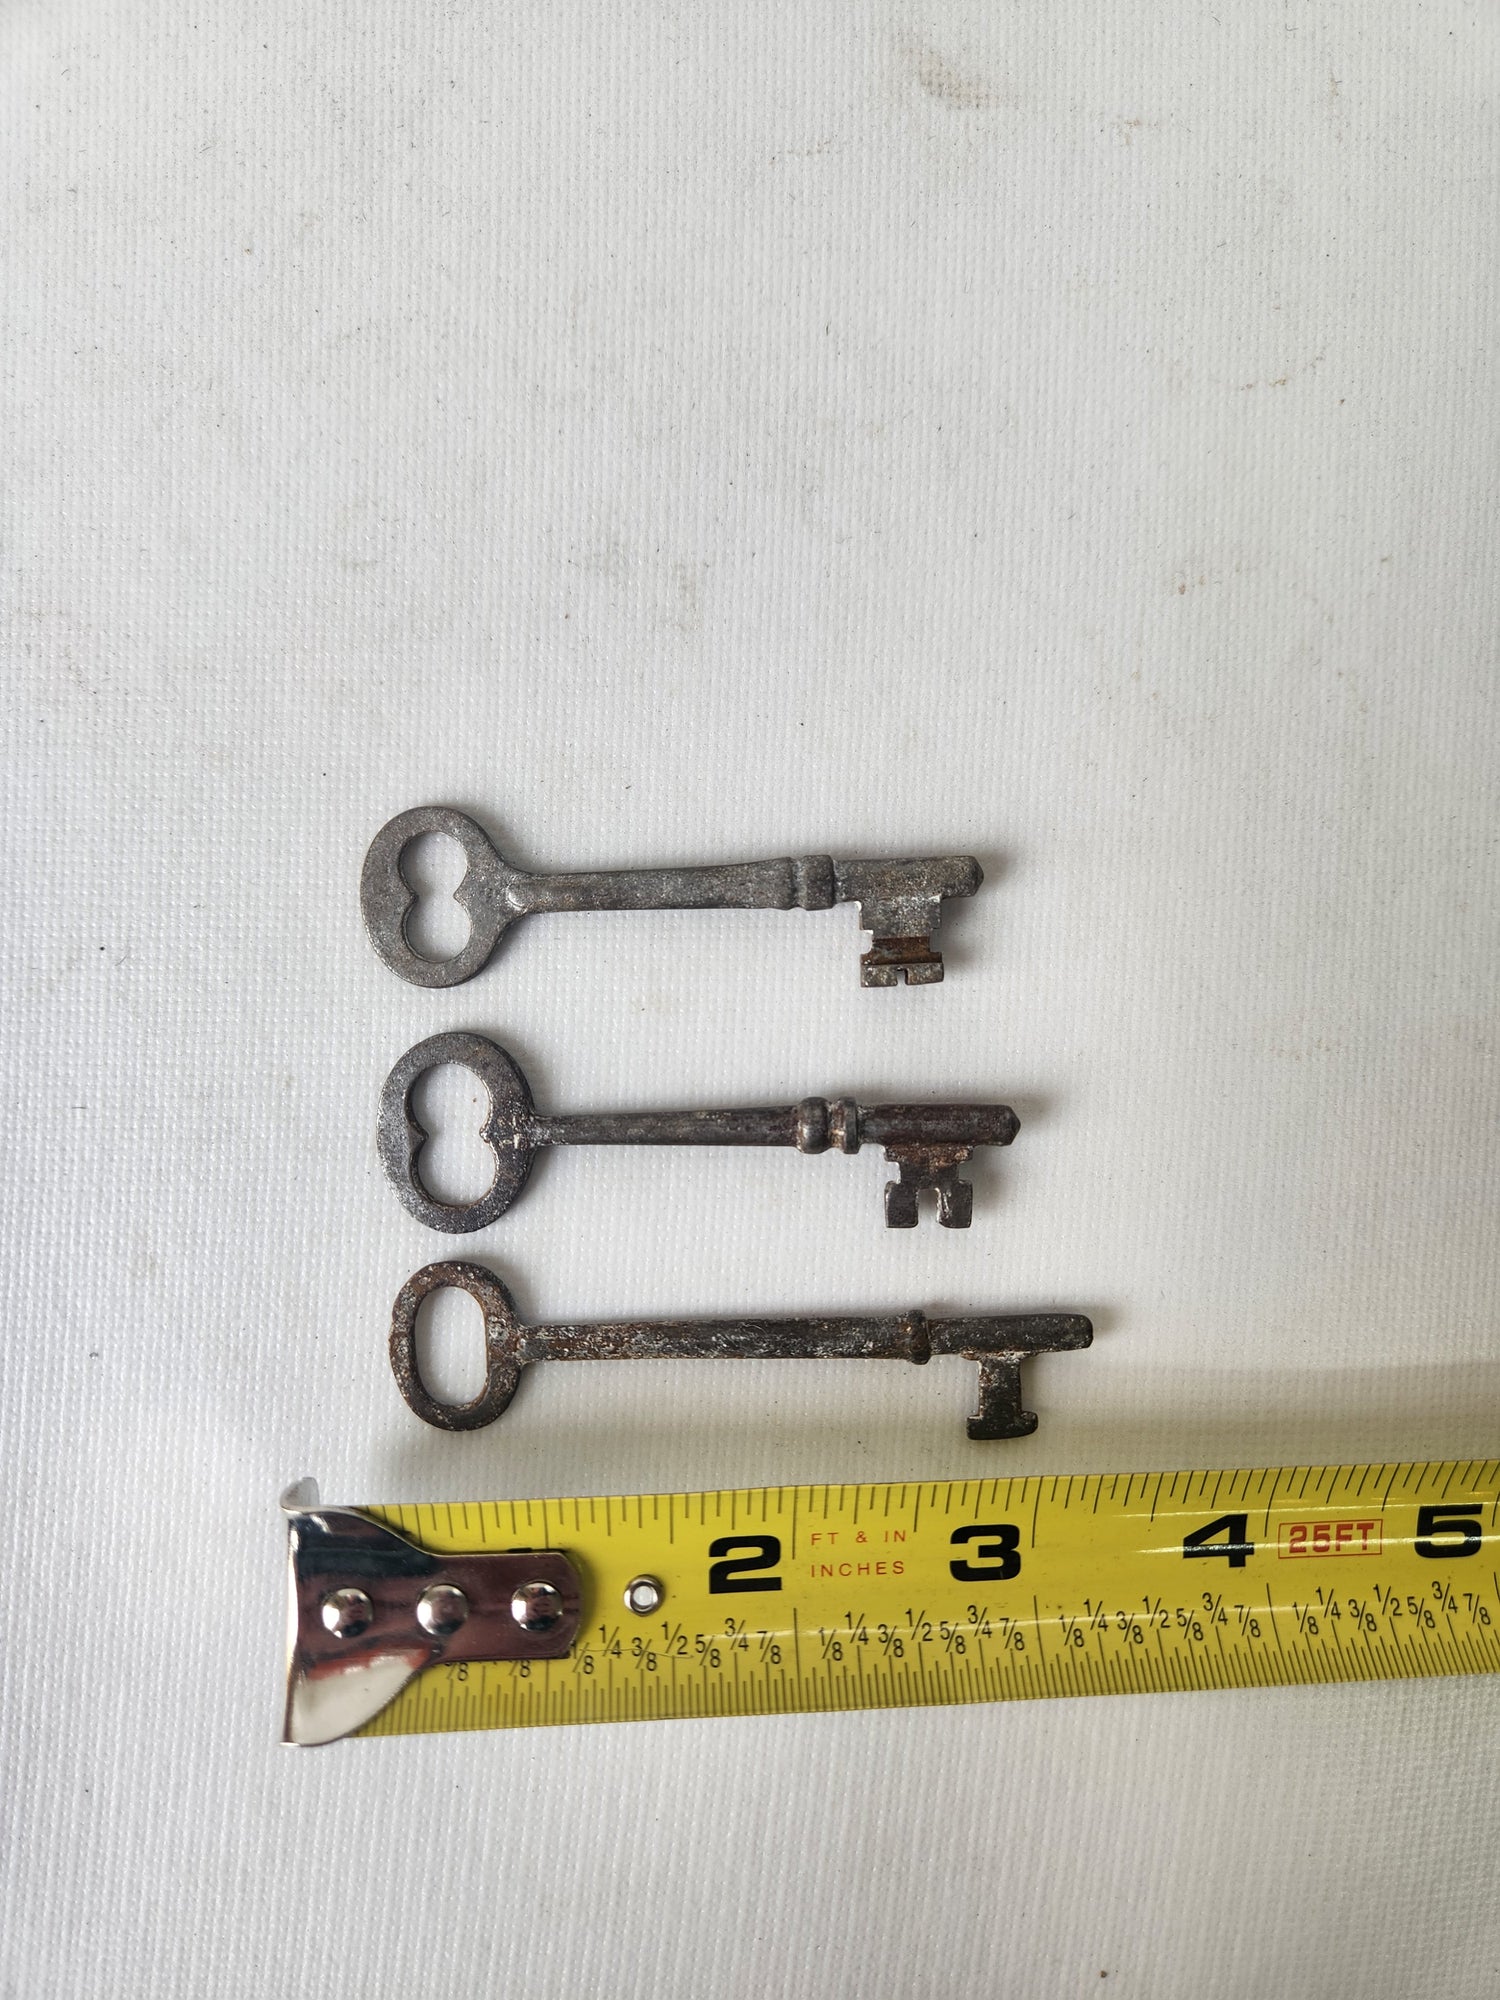 Lot Of 4 Vintage Keys/ Skeleton Keys as is